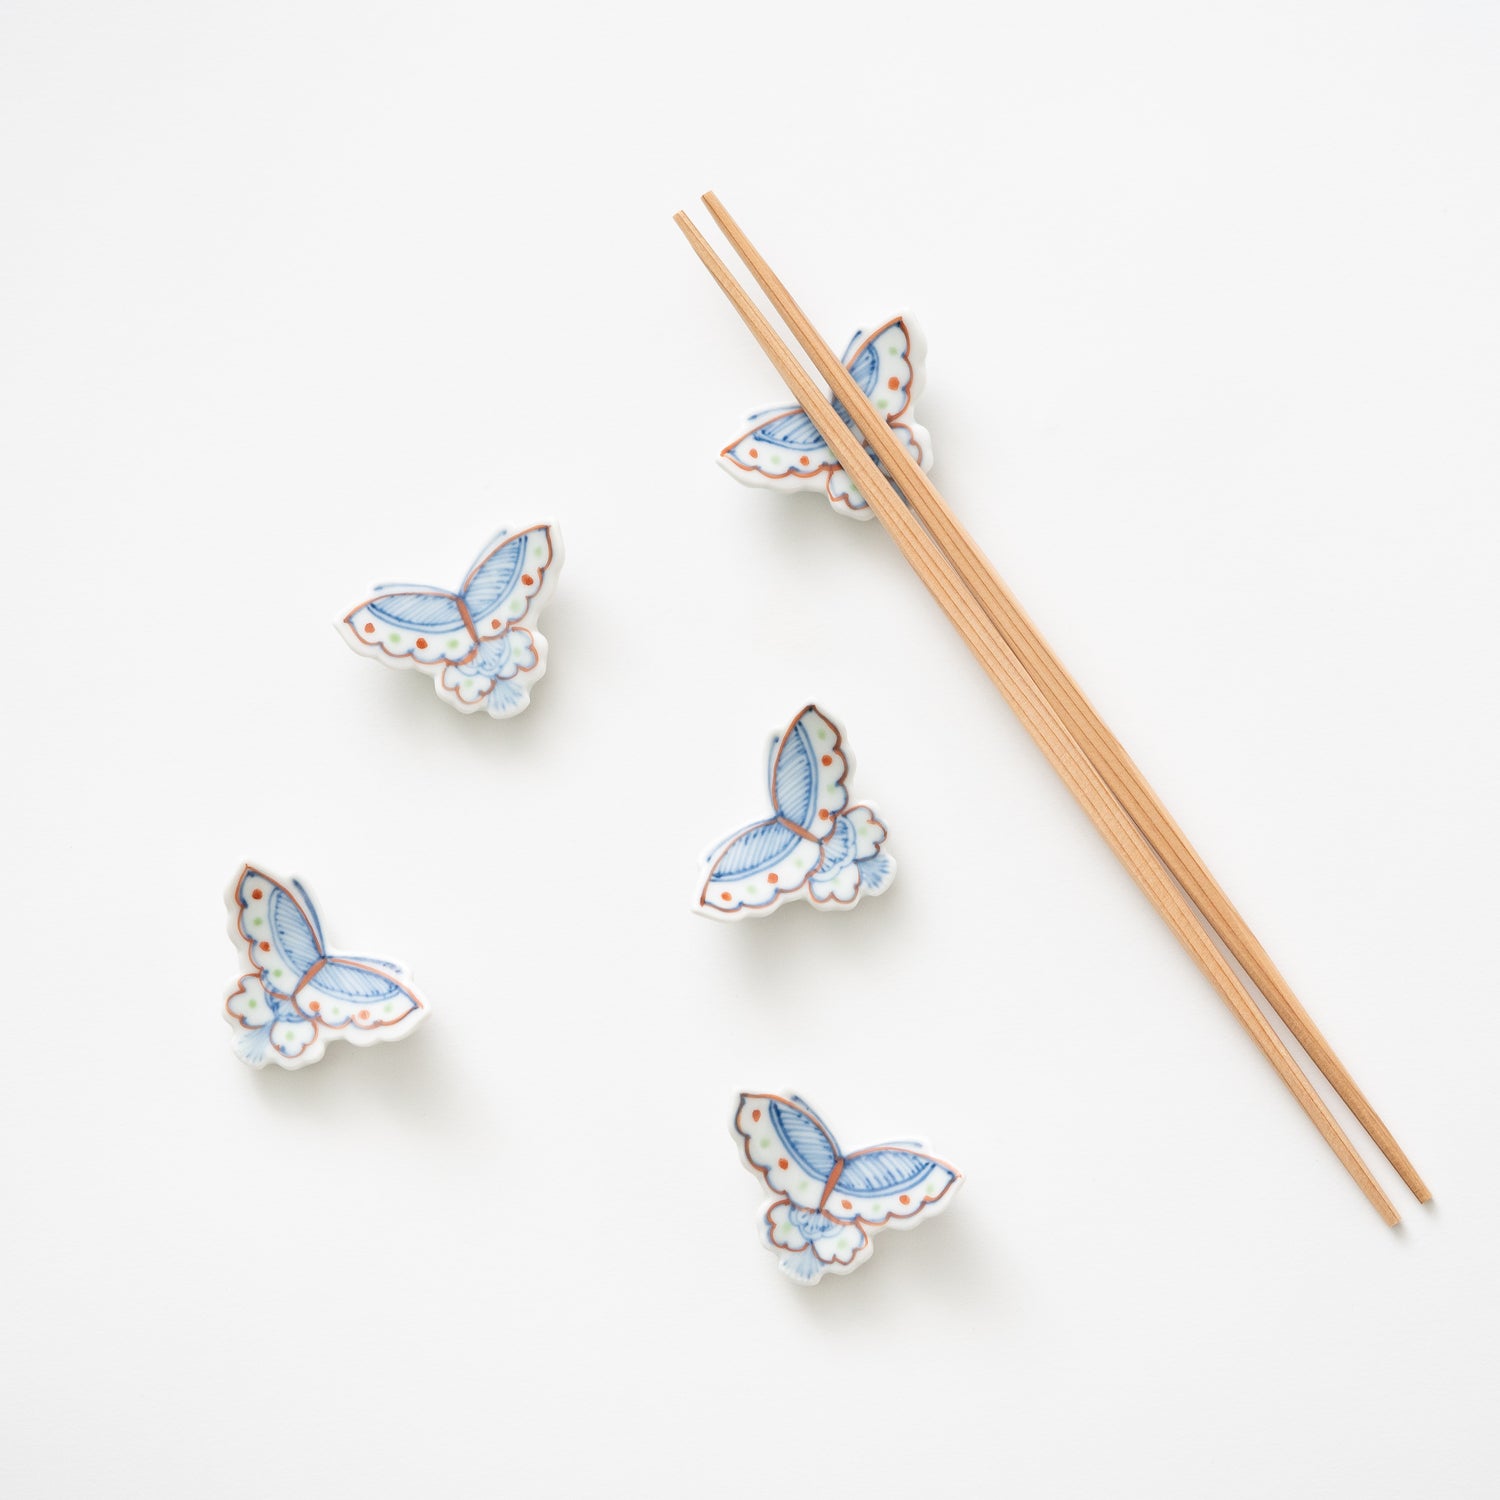 Butterfly Chopstick Rest 5pcs Set